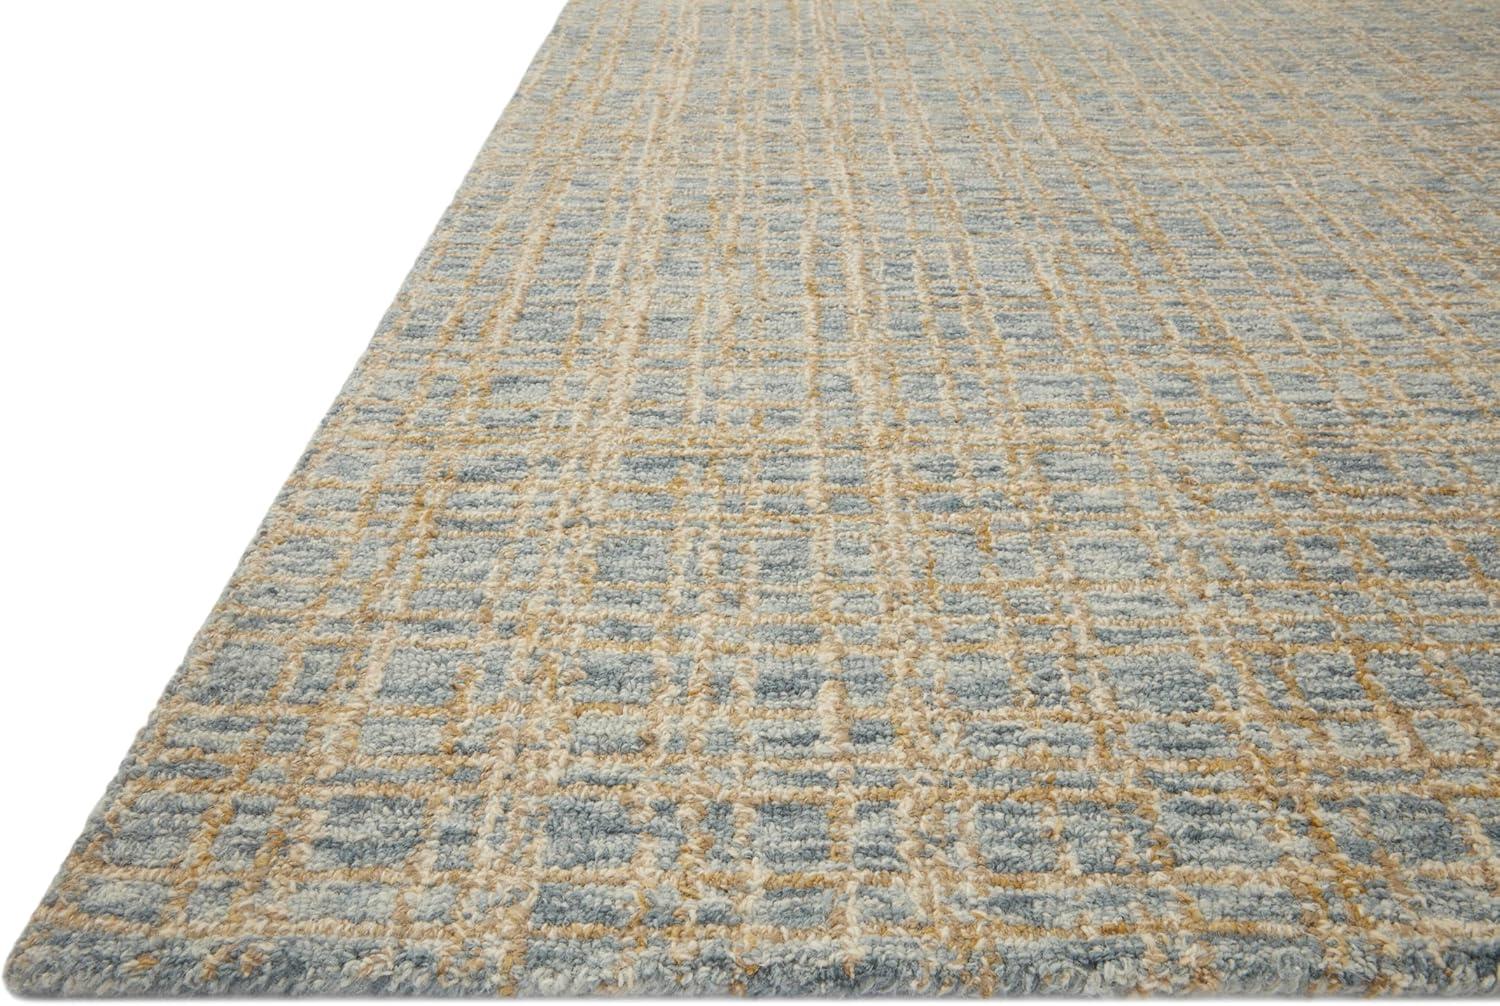 Handmade Tufted Blue/Sand Wool Rectangular Area Rug